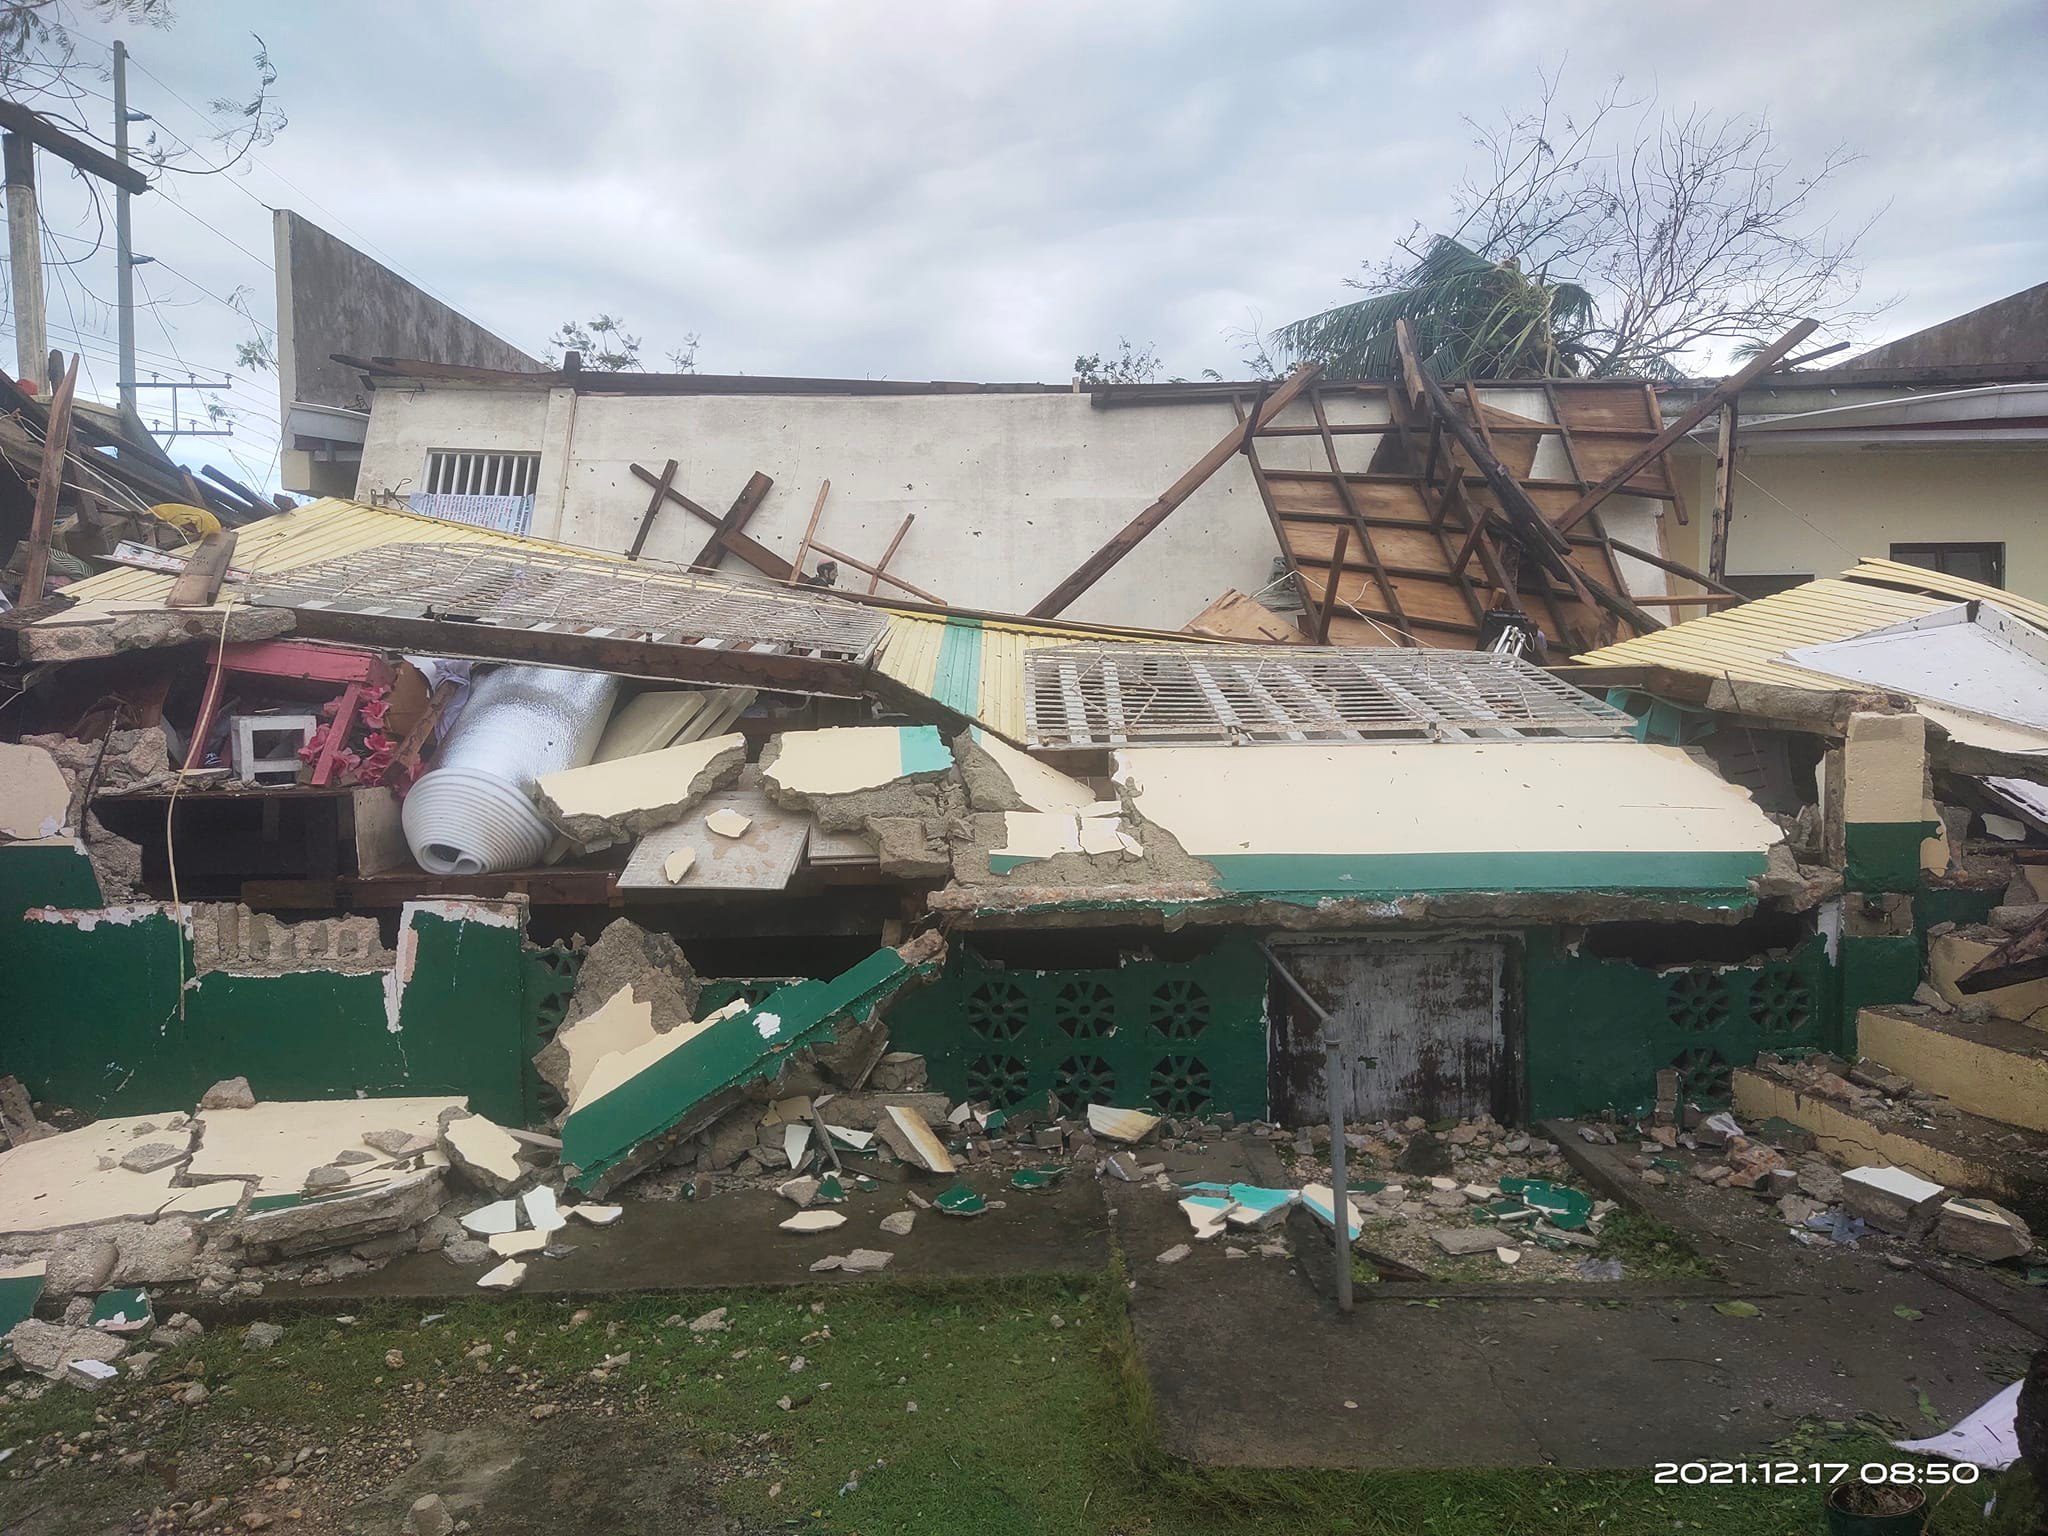 Maribojoc in Bohol faces new cycle of destruction, renewal